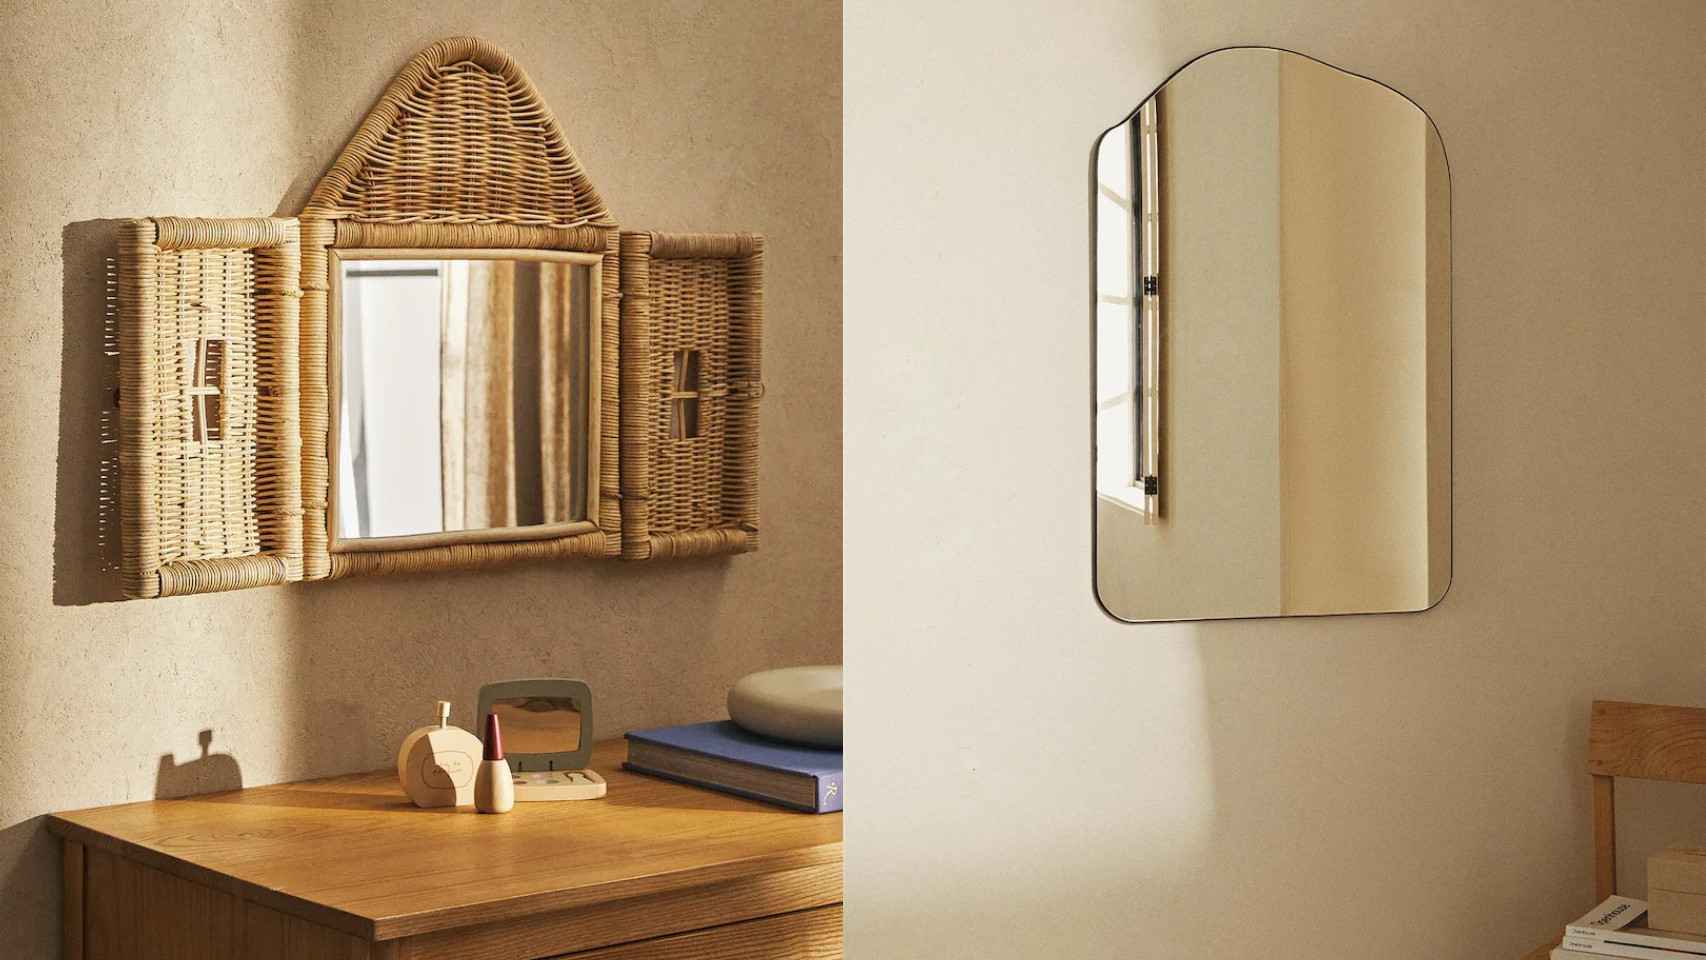 A la izquierda, el espejo pared infantil casita ratán y, a la derecha, el espejo pared irregular.